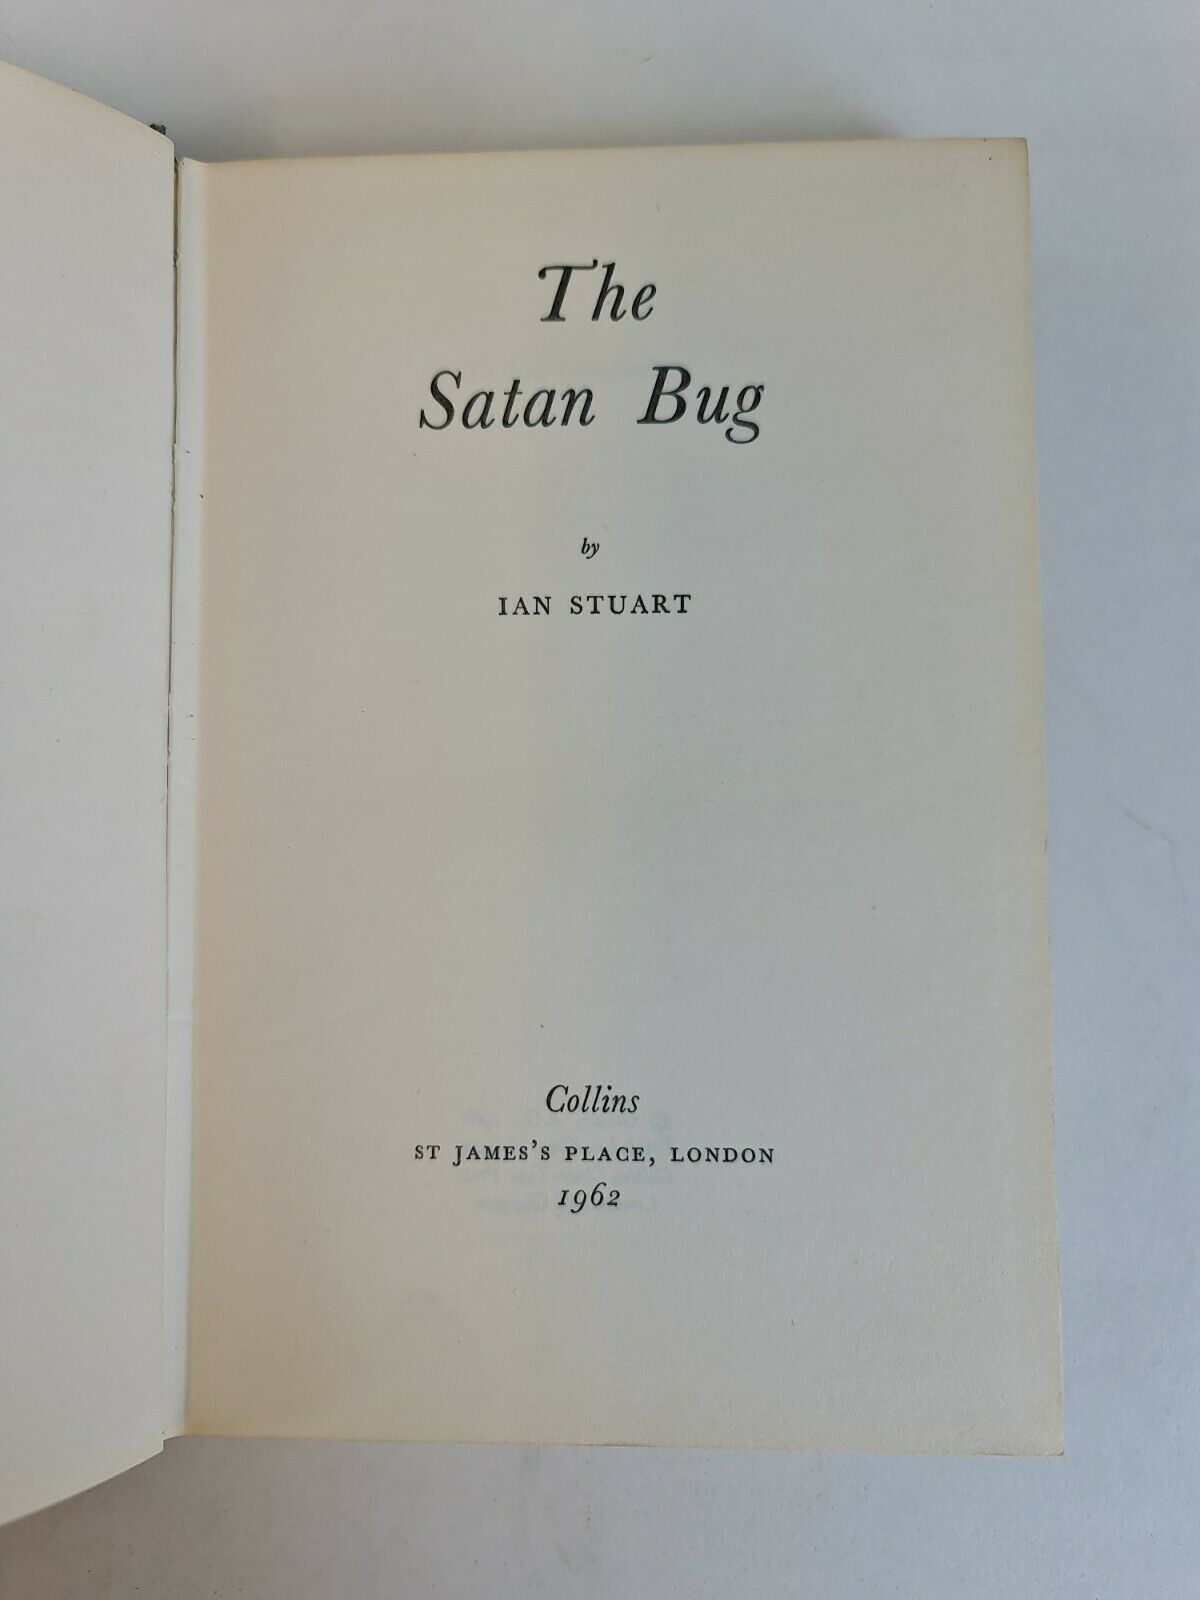 The Satan Bug by Ian Stuart (1962)